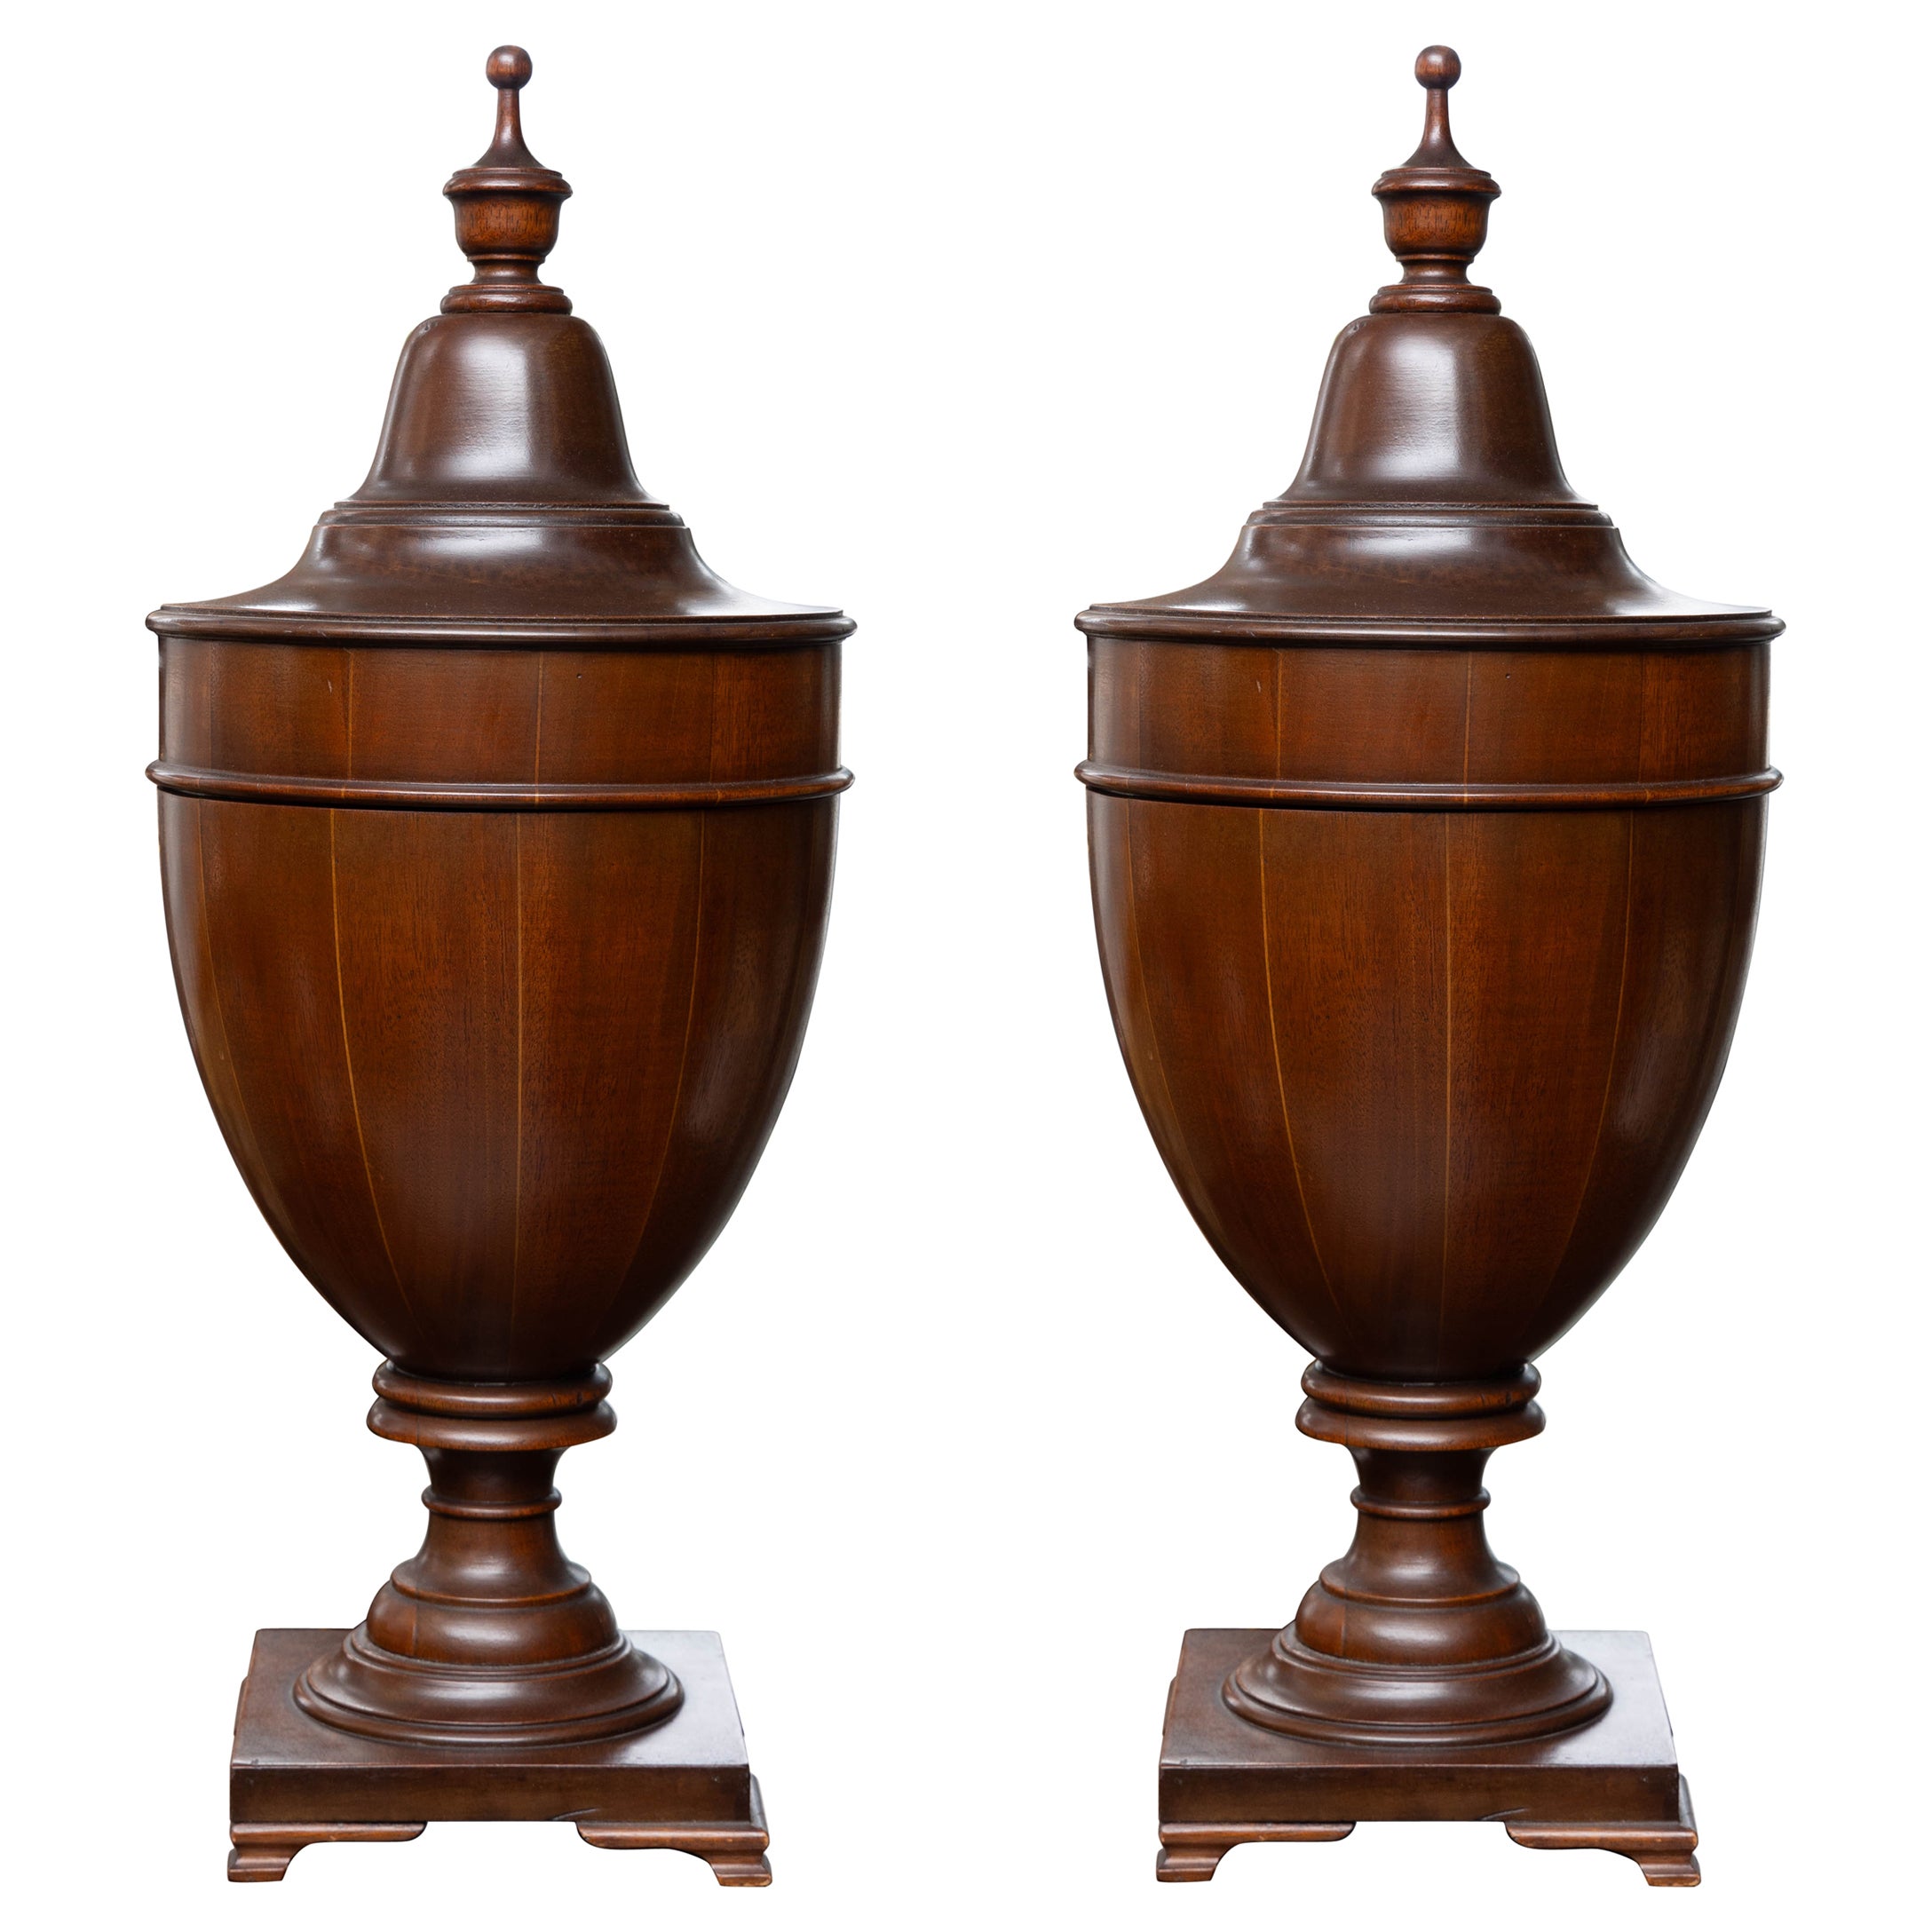 Geschirrurnen aus Mahagoni im George-III-Stil aus Mahagoni – Paar verfügbar, Preis individuell berechnet.